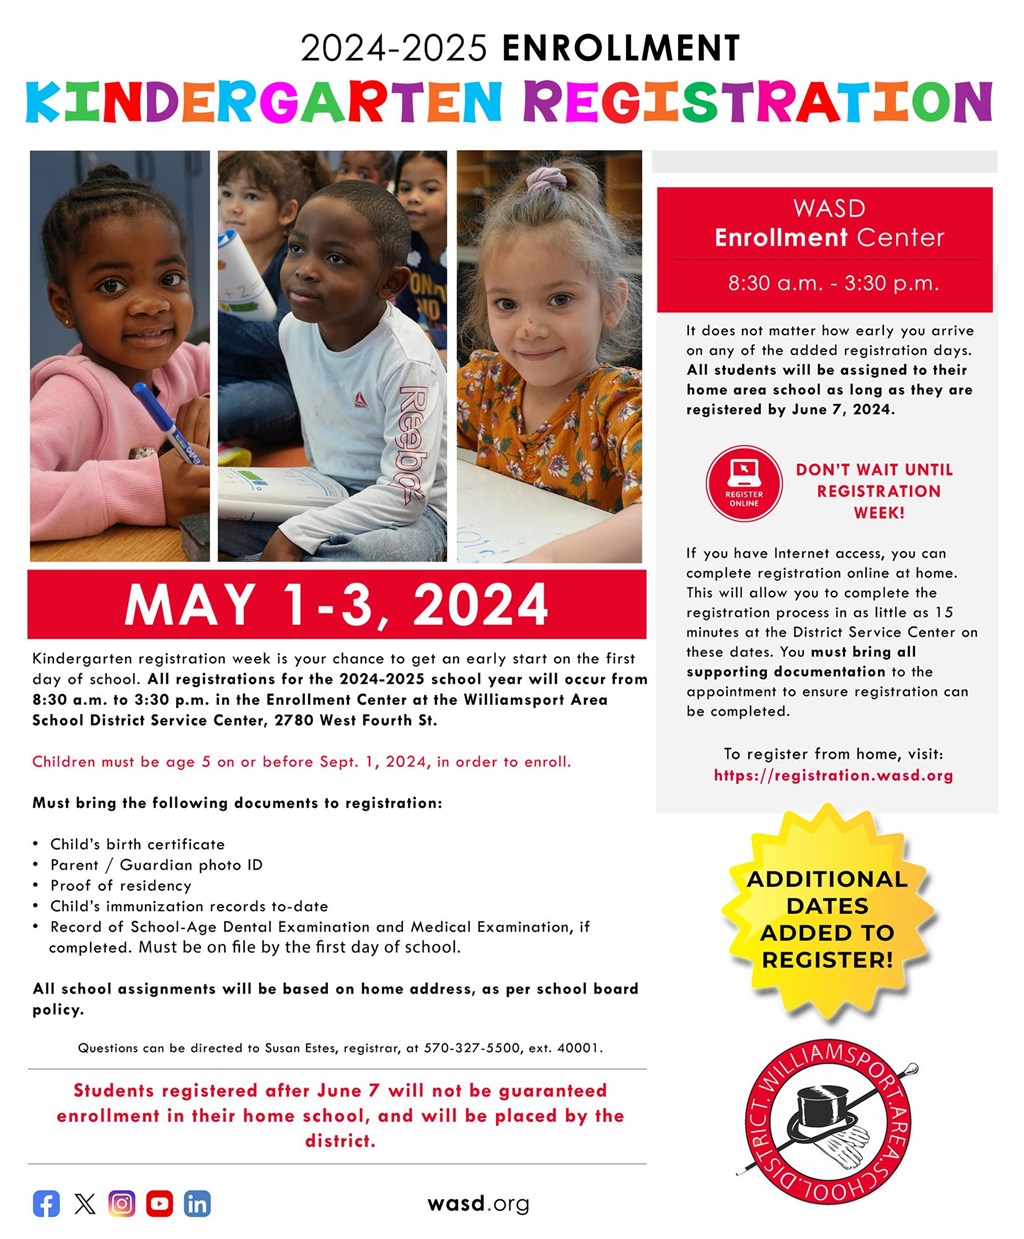 A flyer detailing information on th extended kindergarten registration period.